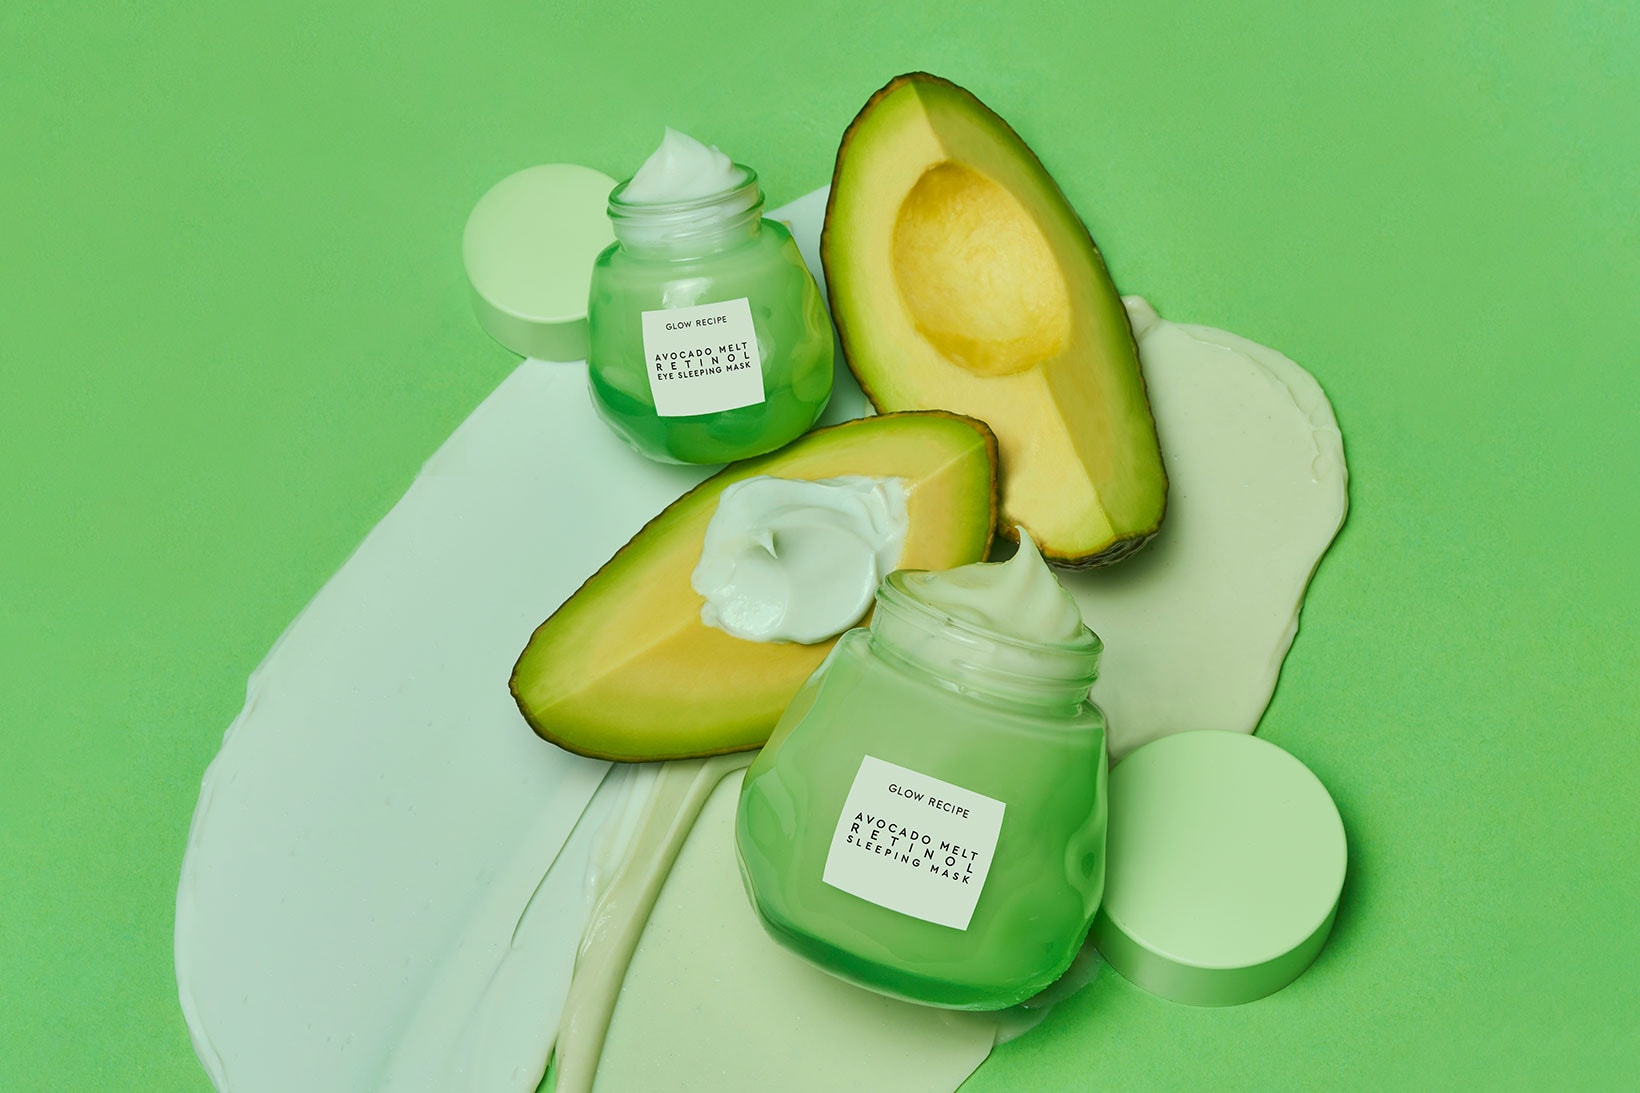 glow recipe avocado melt retinol sleeping eye masks k-beauty sephora hyaluronic acid skincare